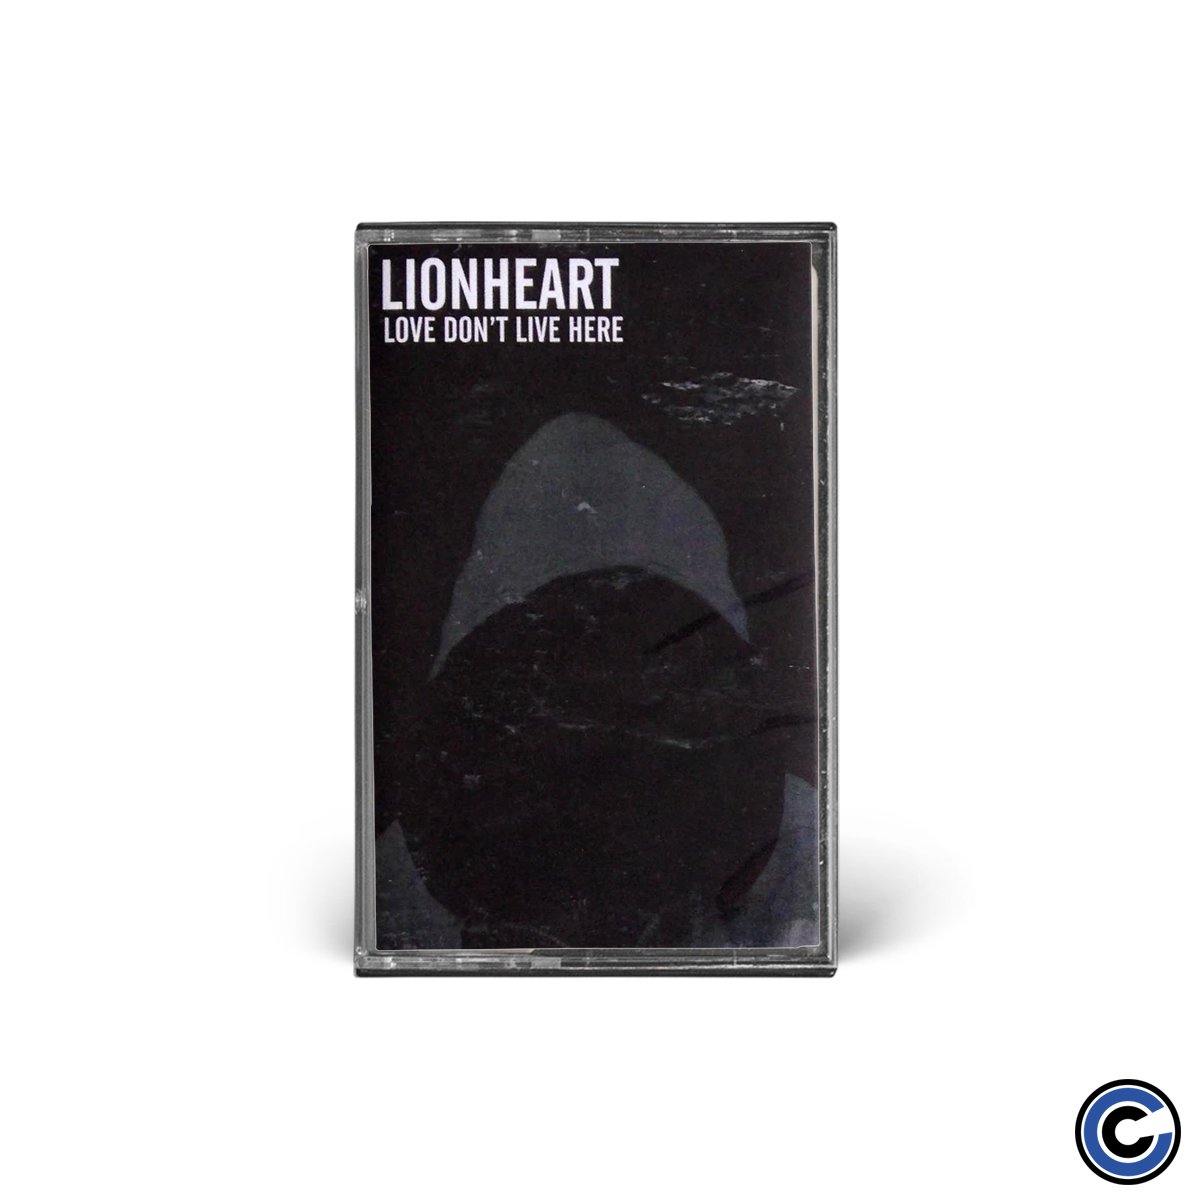 Buy – Lionheart "Love Don't Live Here" Cassette – Band & Music Merch – Cold Cuts Merch